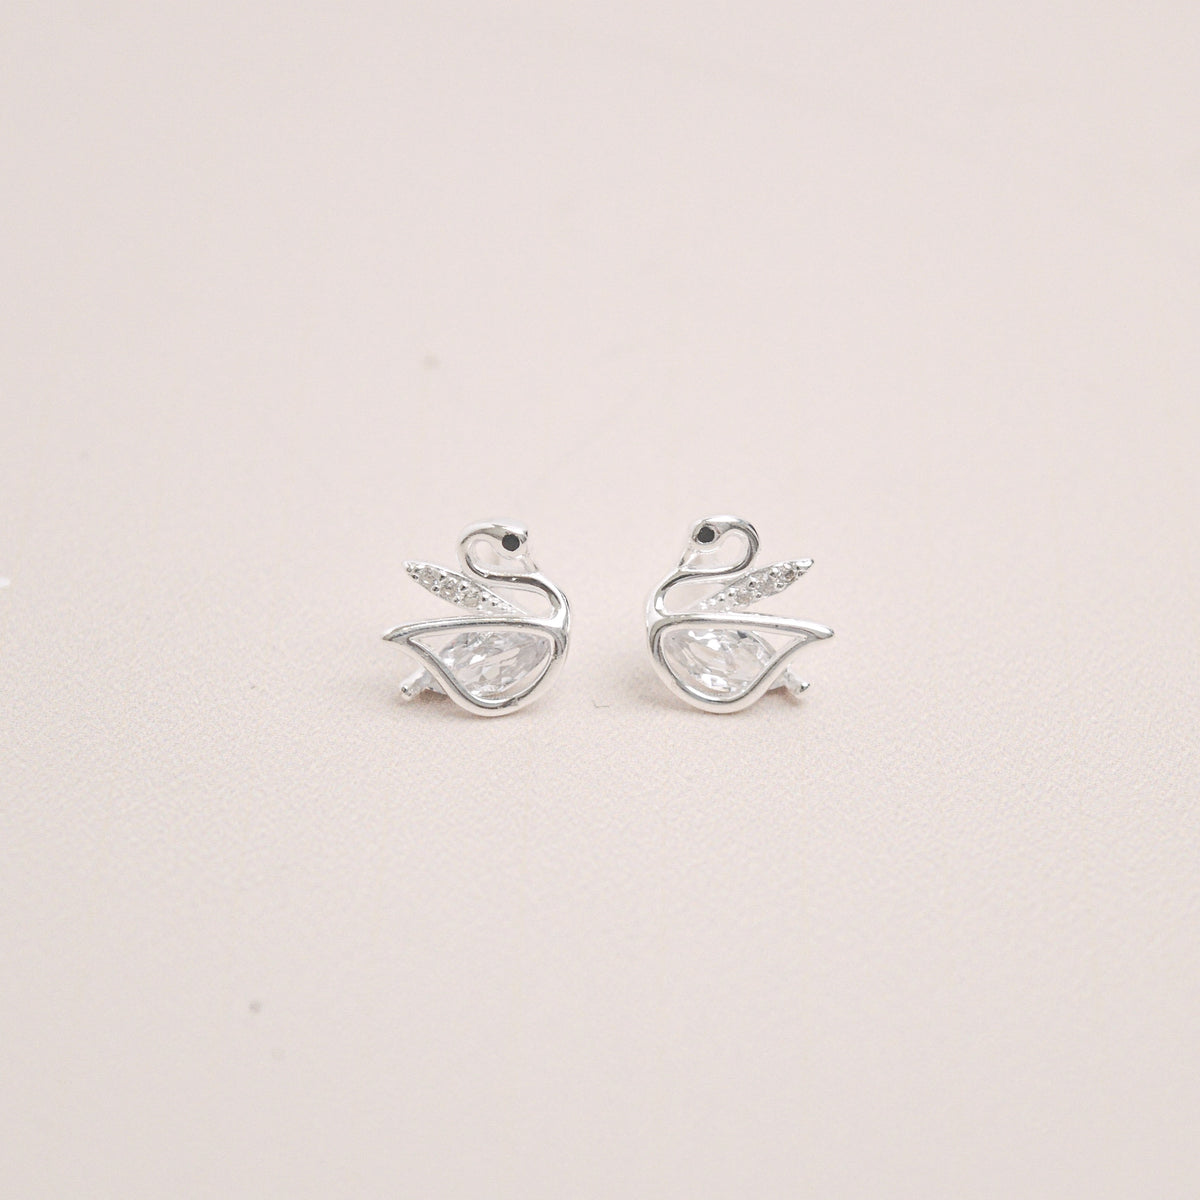 Swans Stud Earrings (S990)